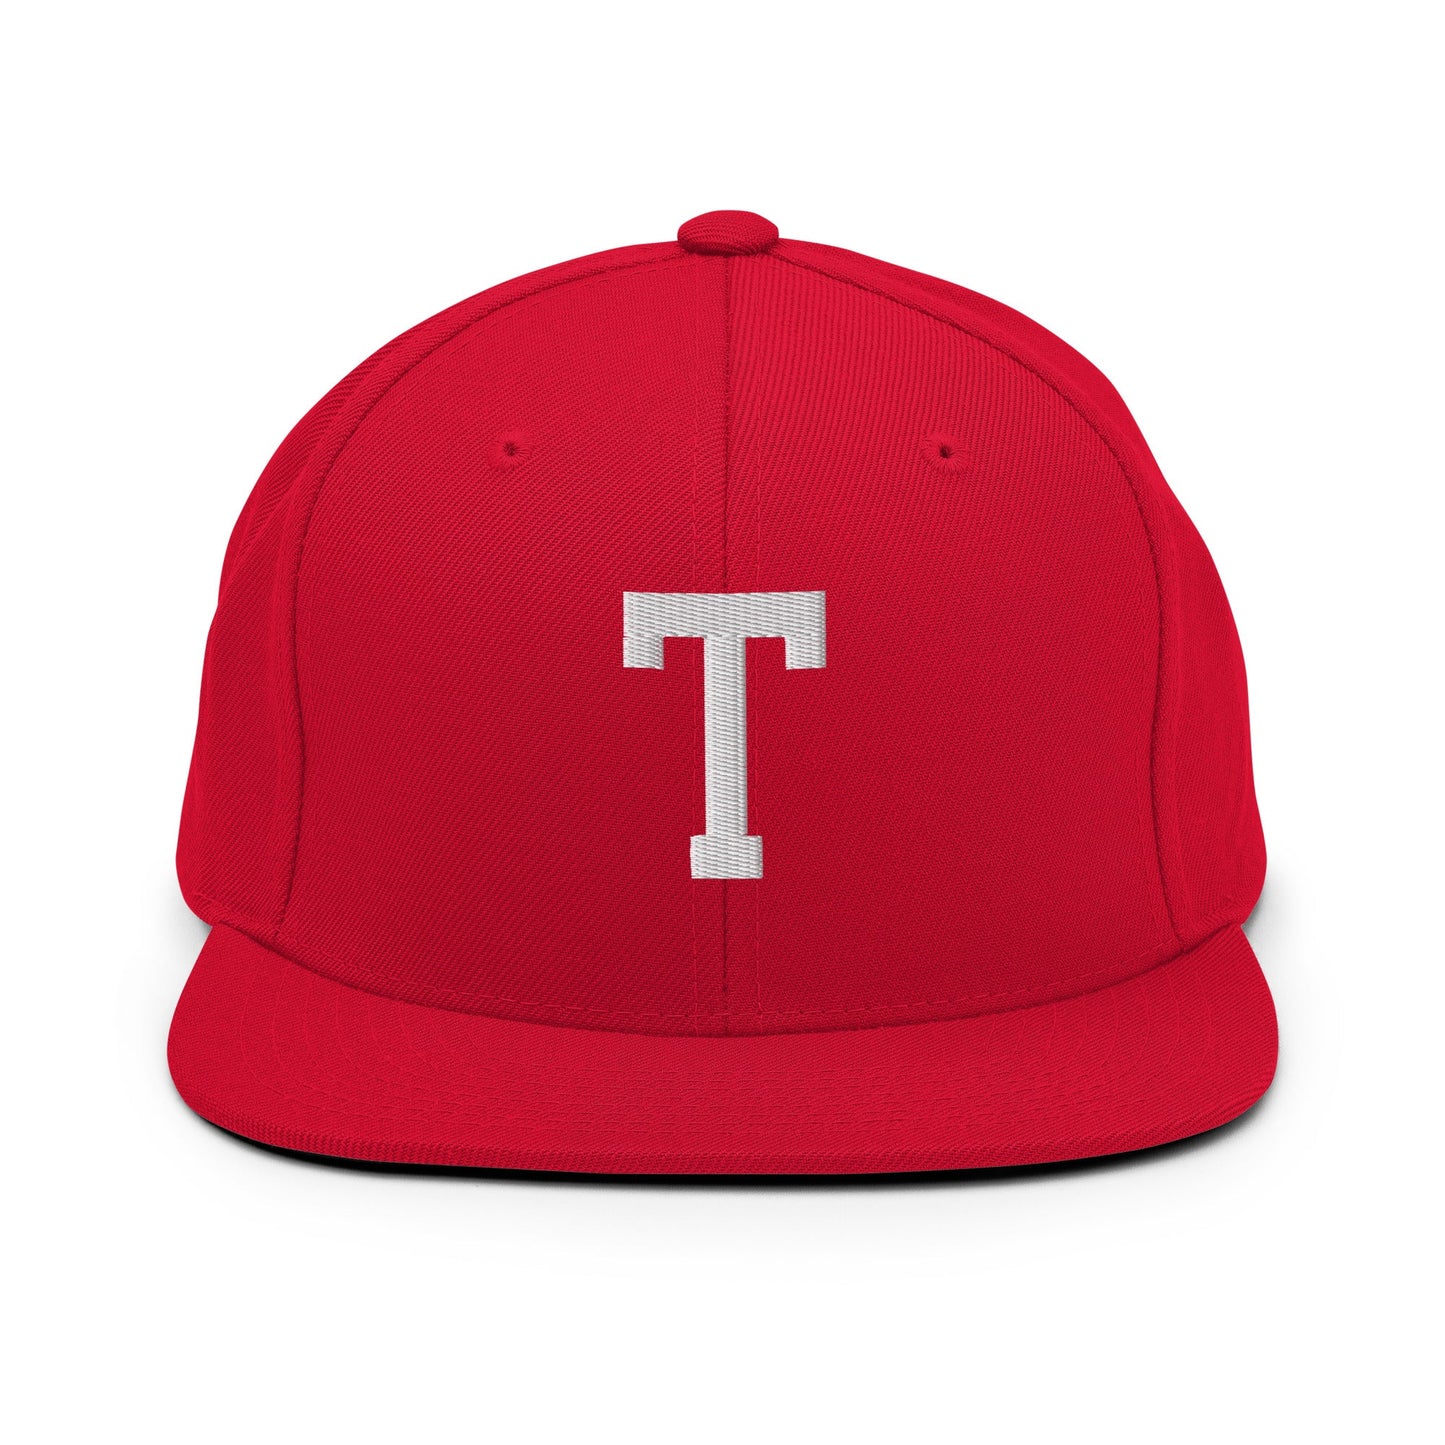 Tulsa Letter T Varsity Letterman Block Snapback Hat Red